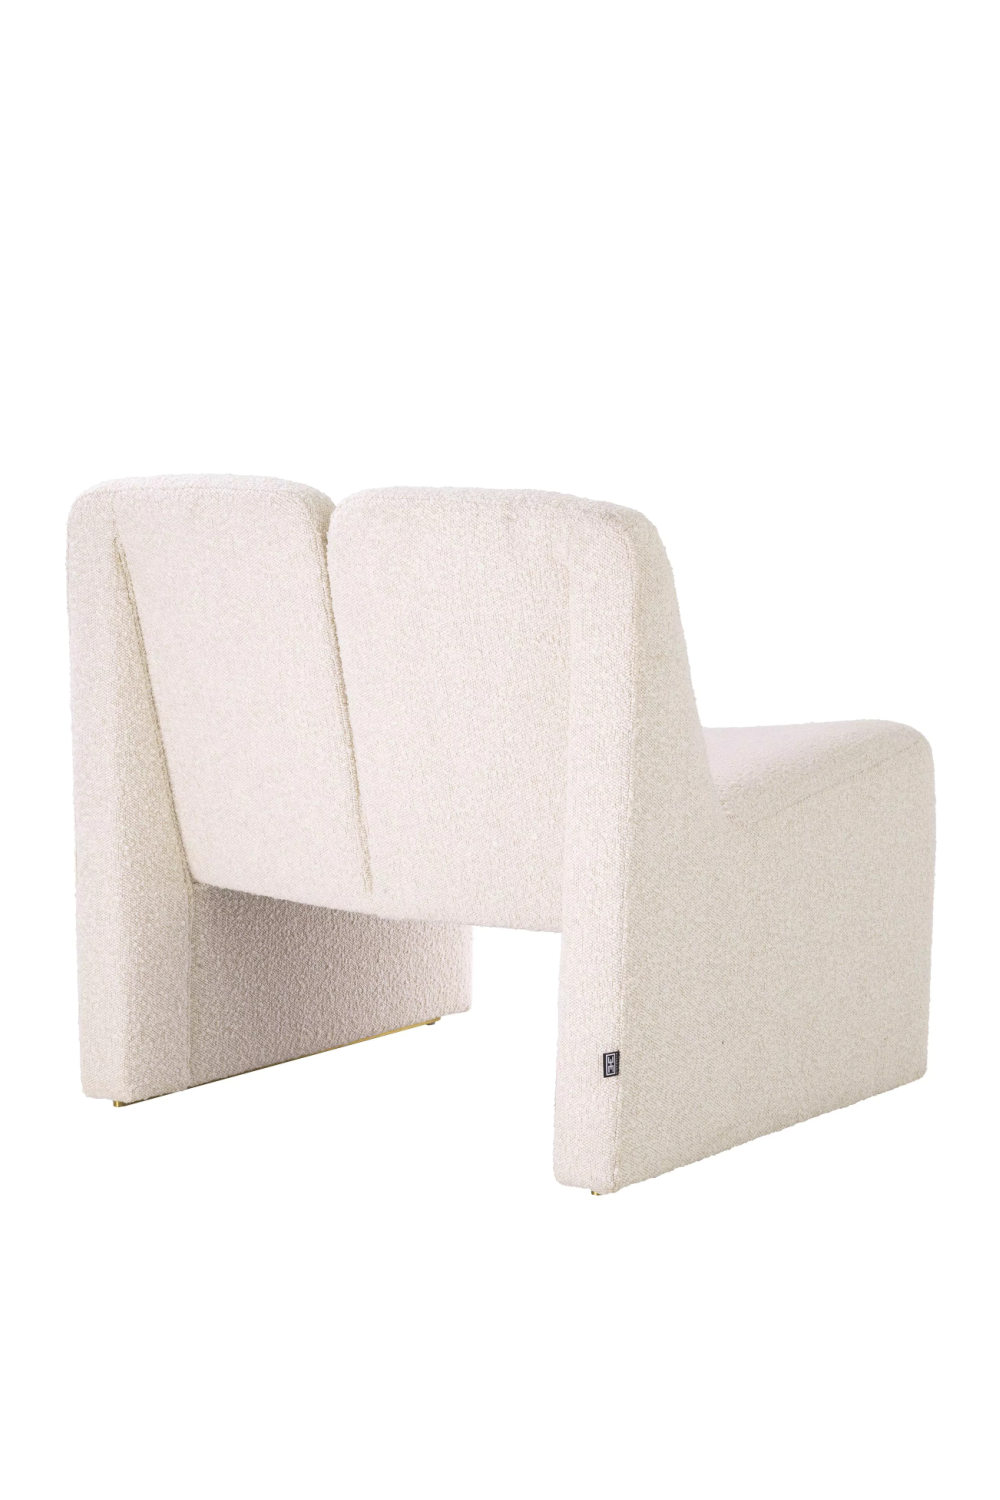 Bouclé Modern Lounge Chair | Eichholtz Macintosh | Oroa.com